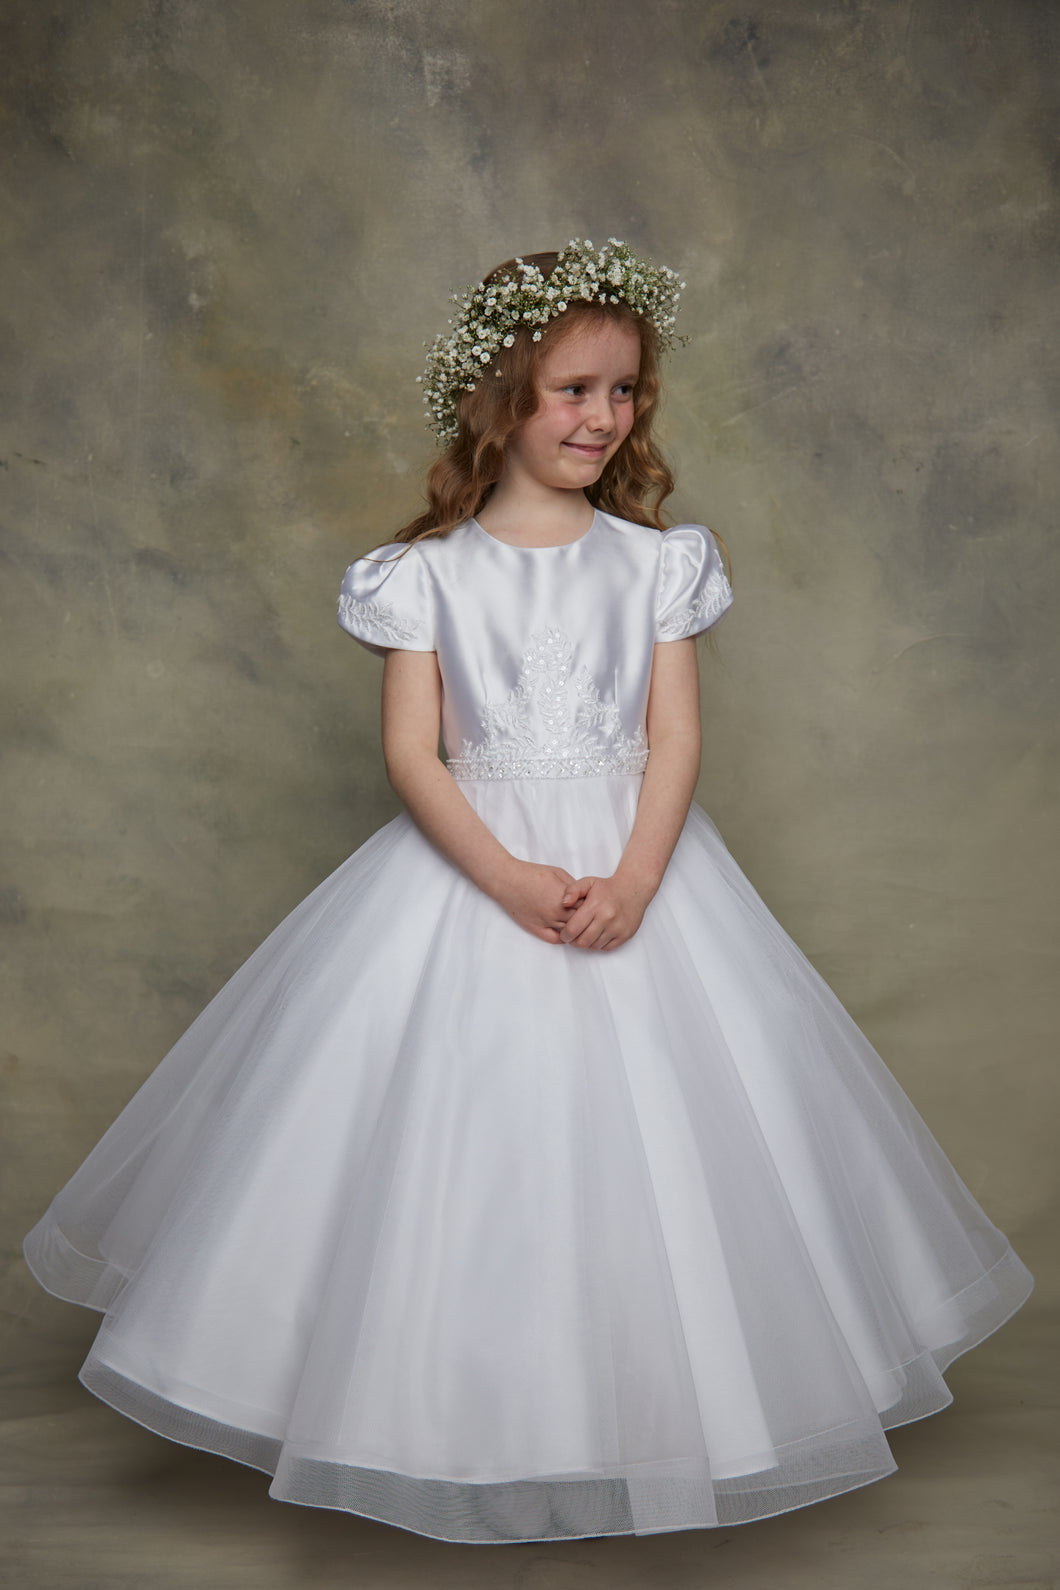 SALE COMMUNION DRESS Isabella Girls White Communion Dress:- IS23480 AGE 6, 7 & 8